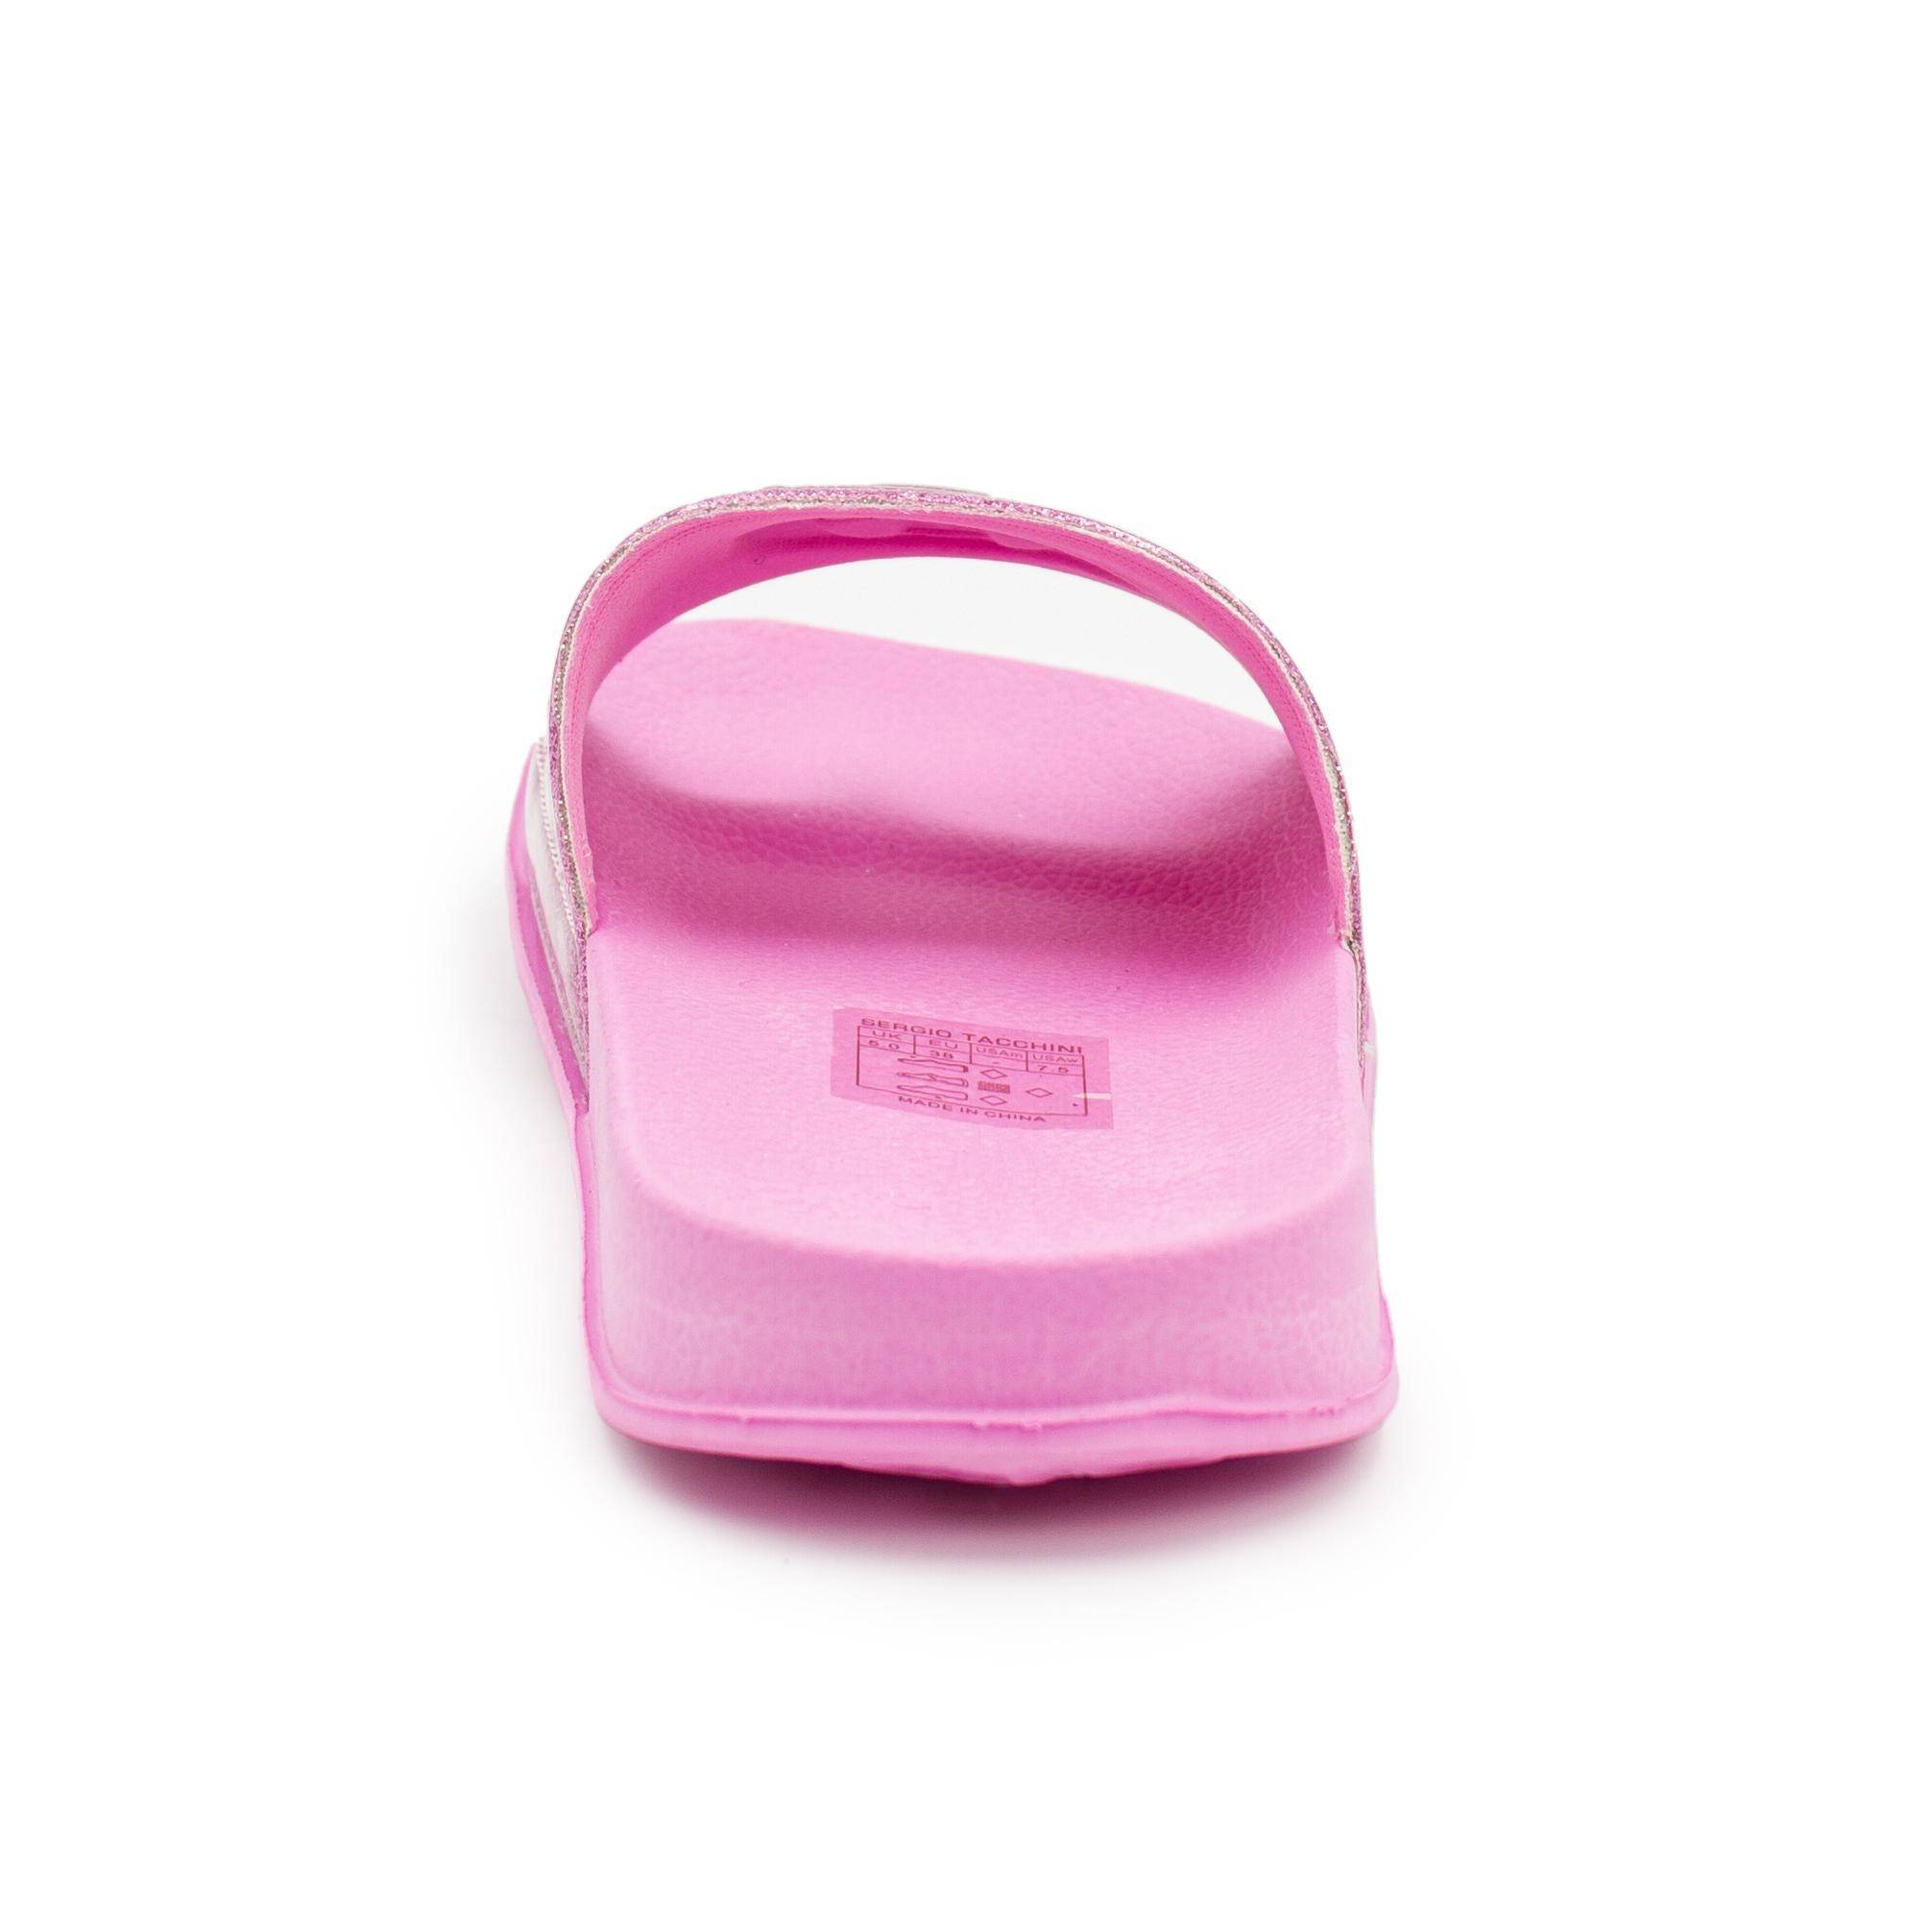 Женские сланцы Sergio Tacchini (REMIX GLITTER STW219006), розовые, цвет розовый, размер 38 - фото 4